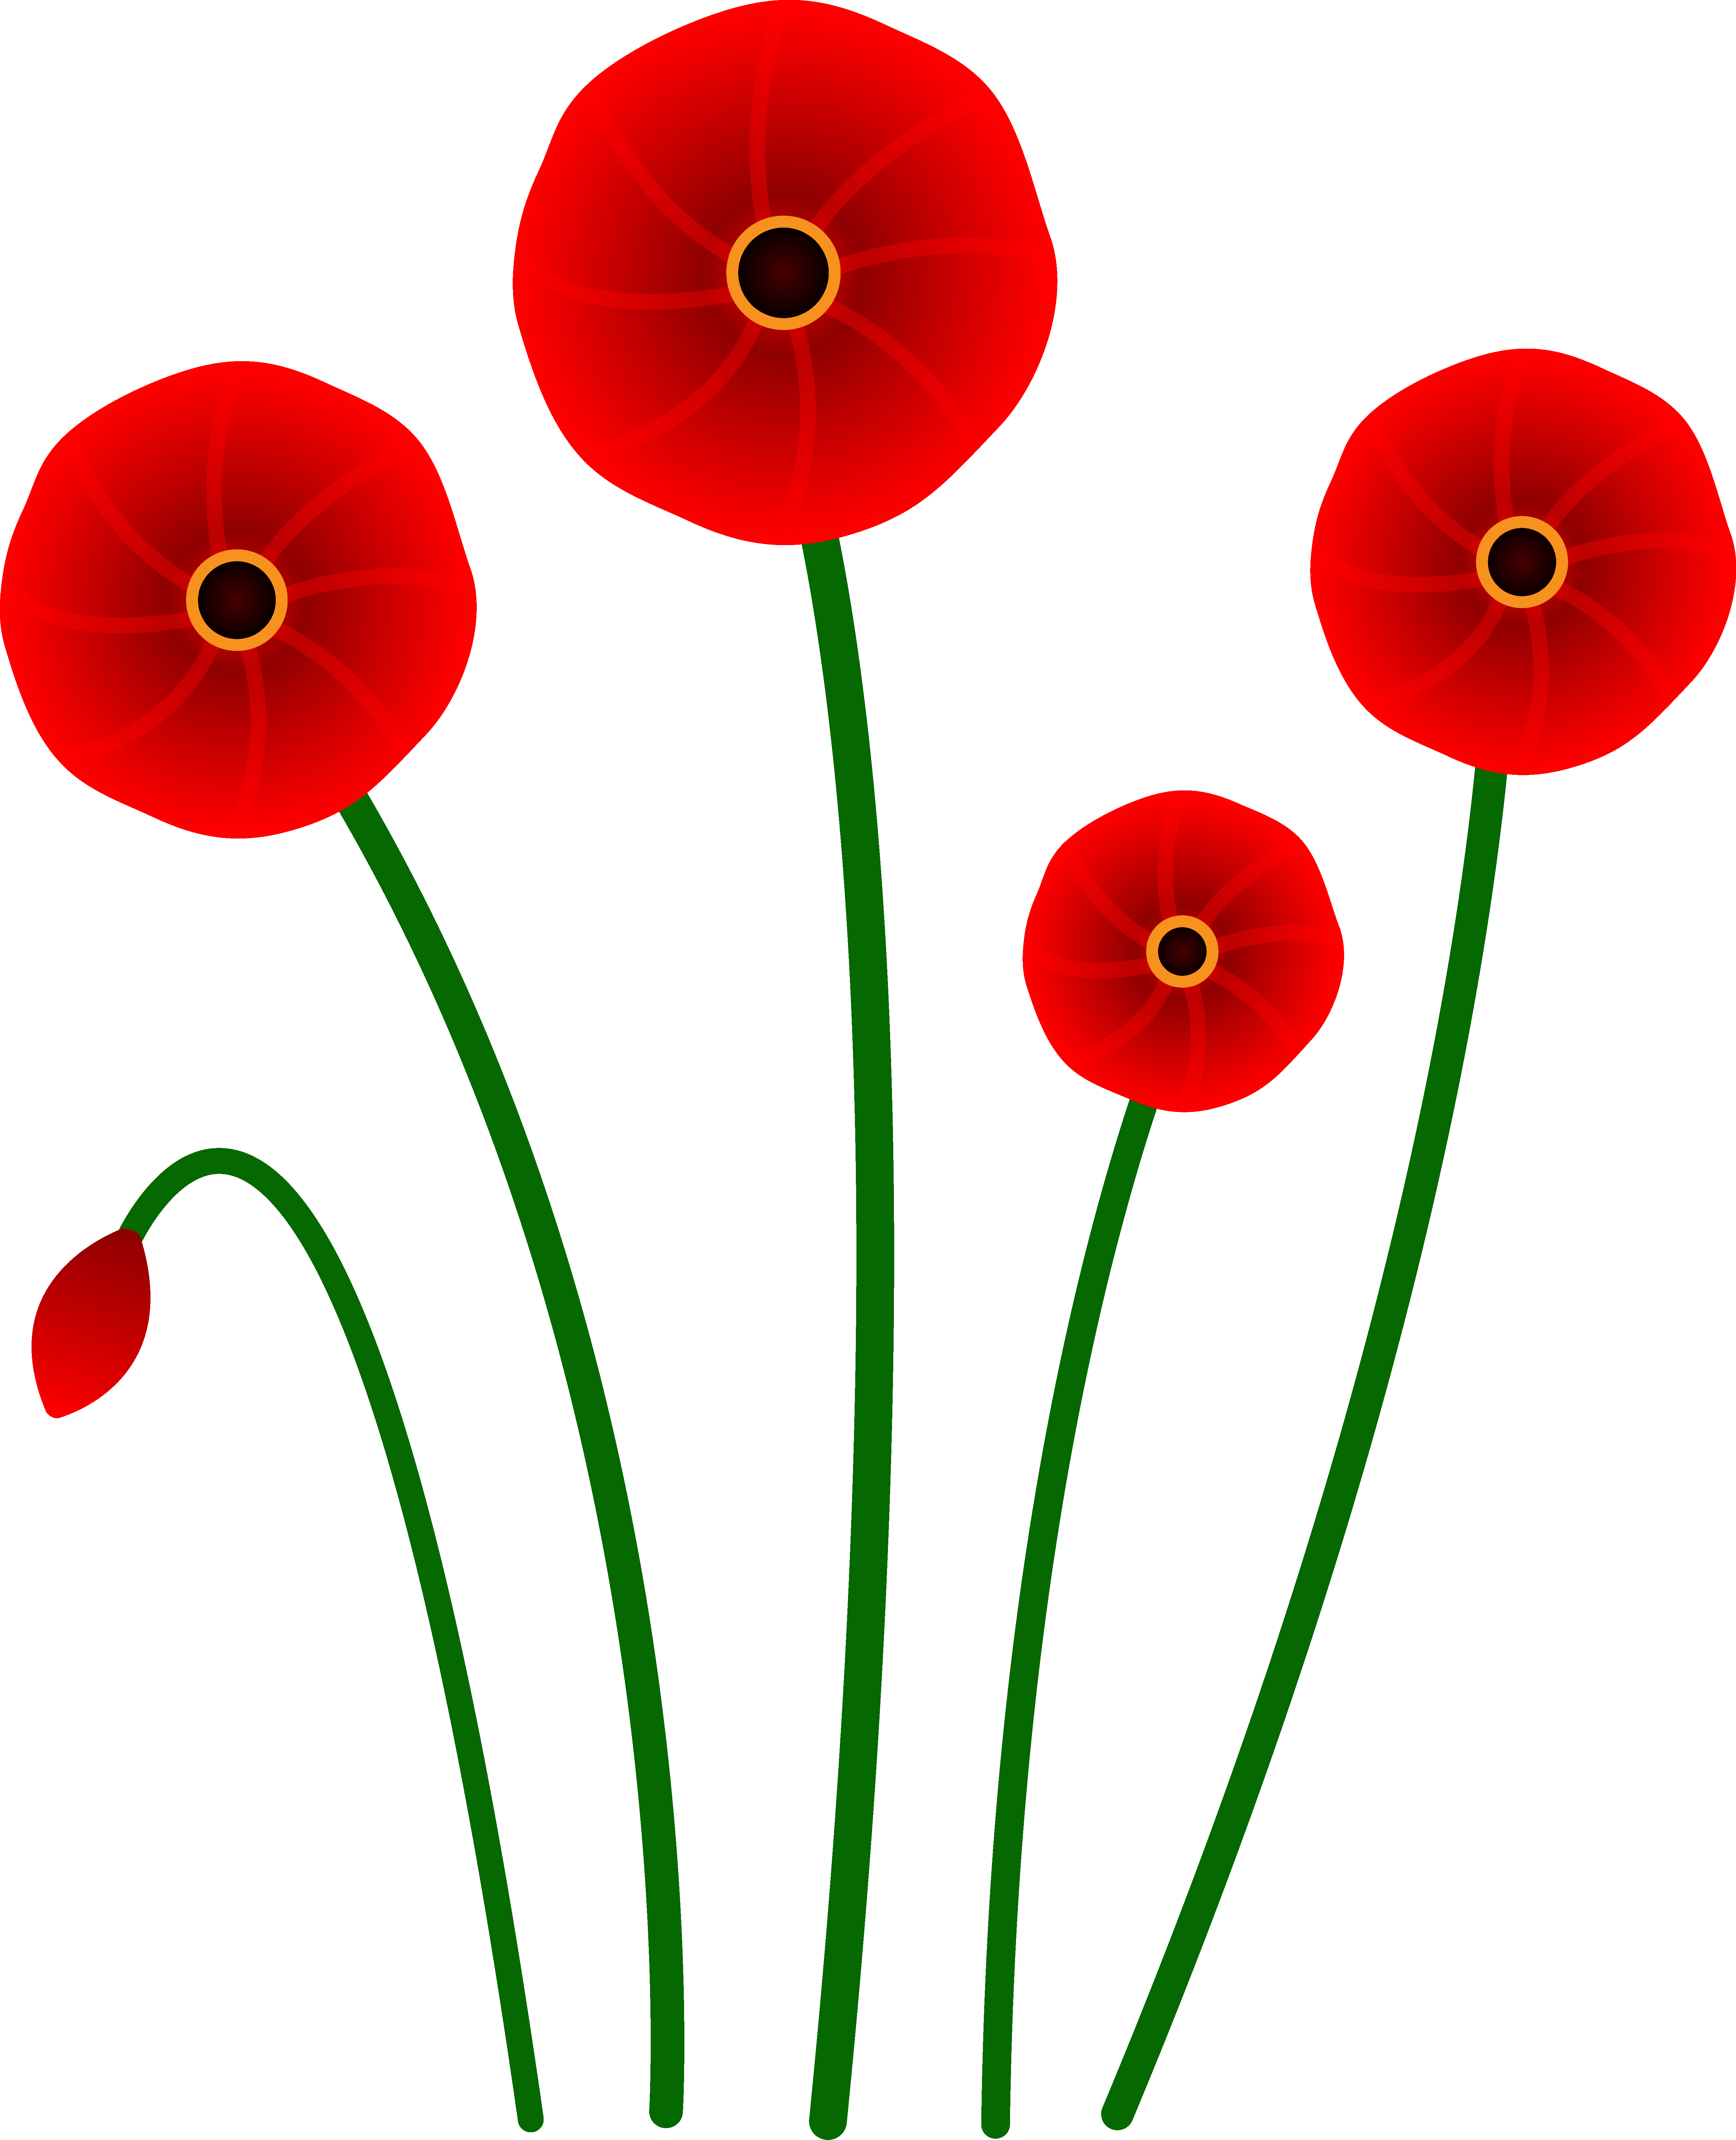 Poppy Flowers Cartoon - ClipArt Best